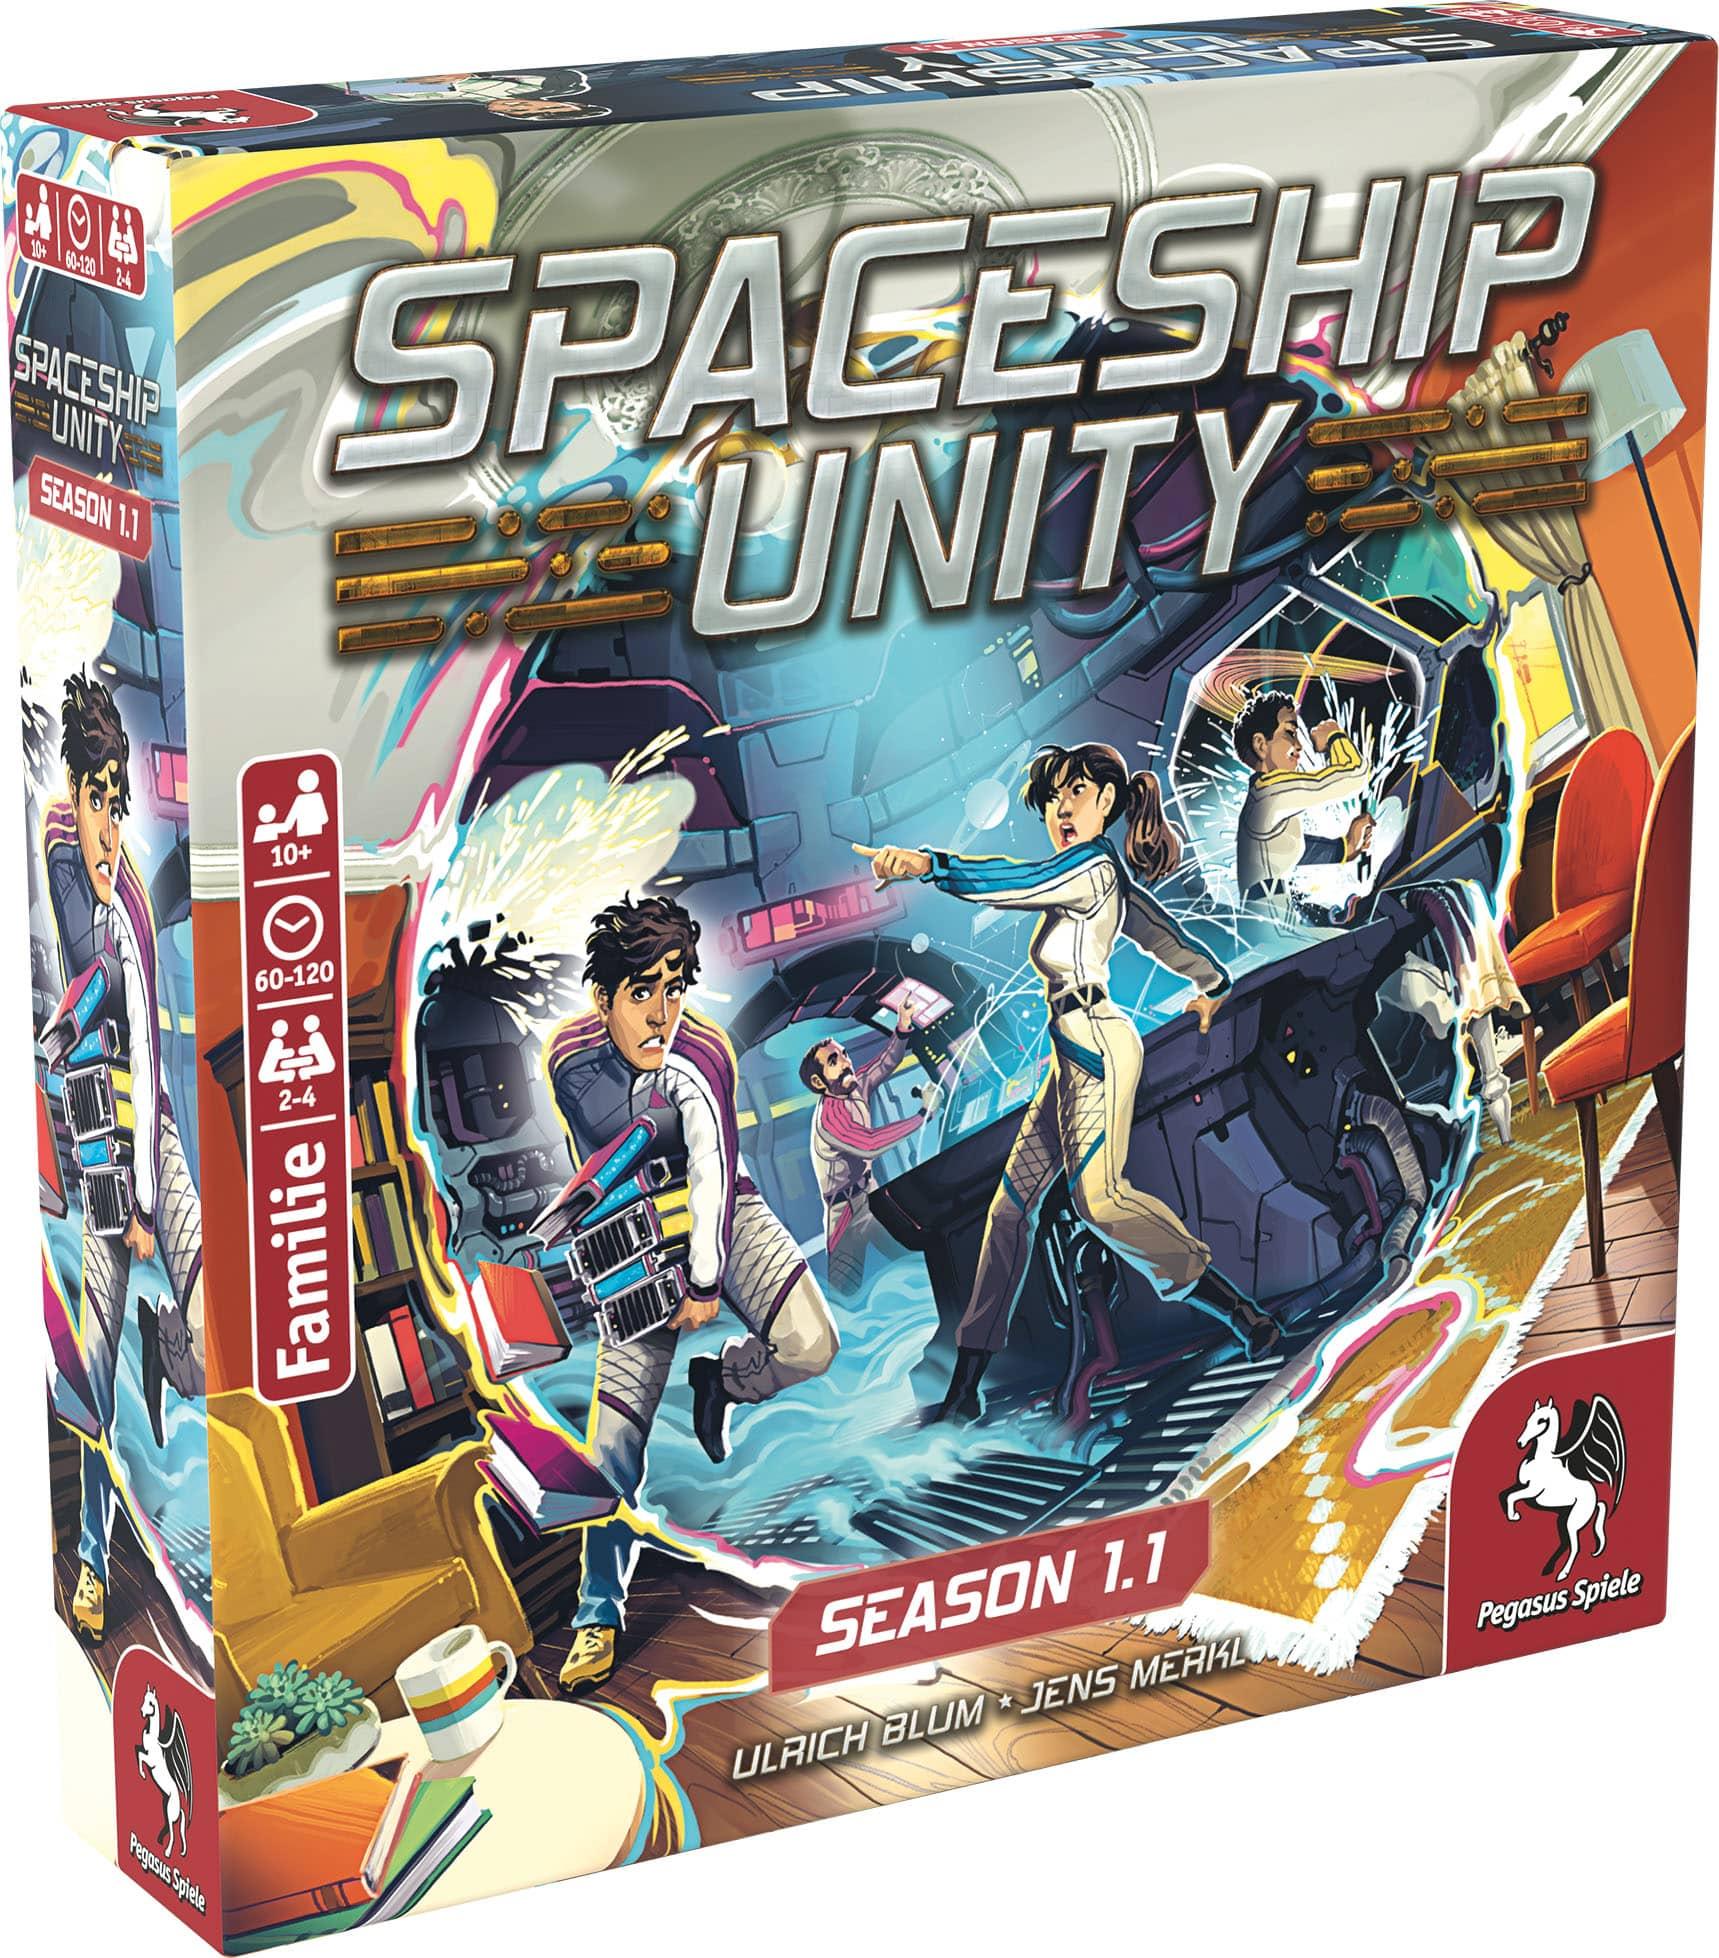 Spaceship Unity.- Season 1.1